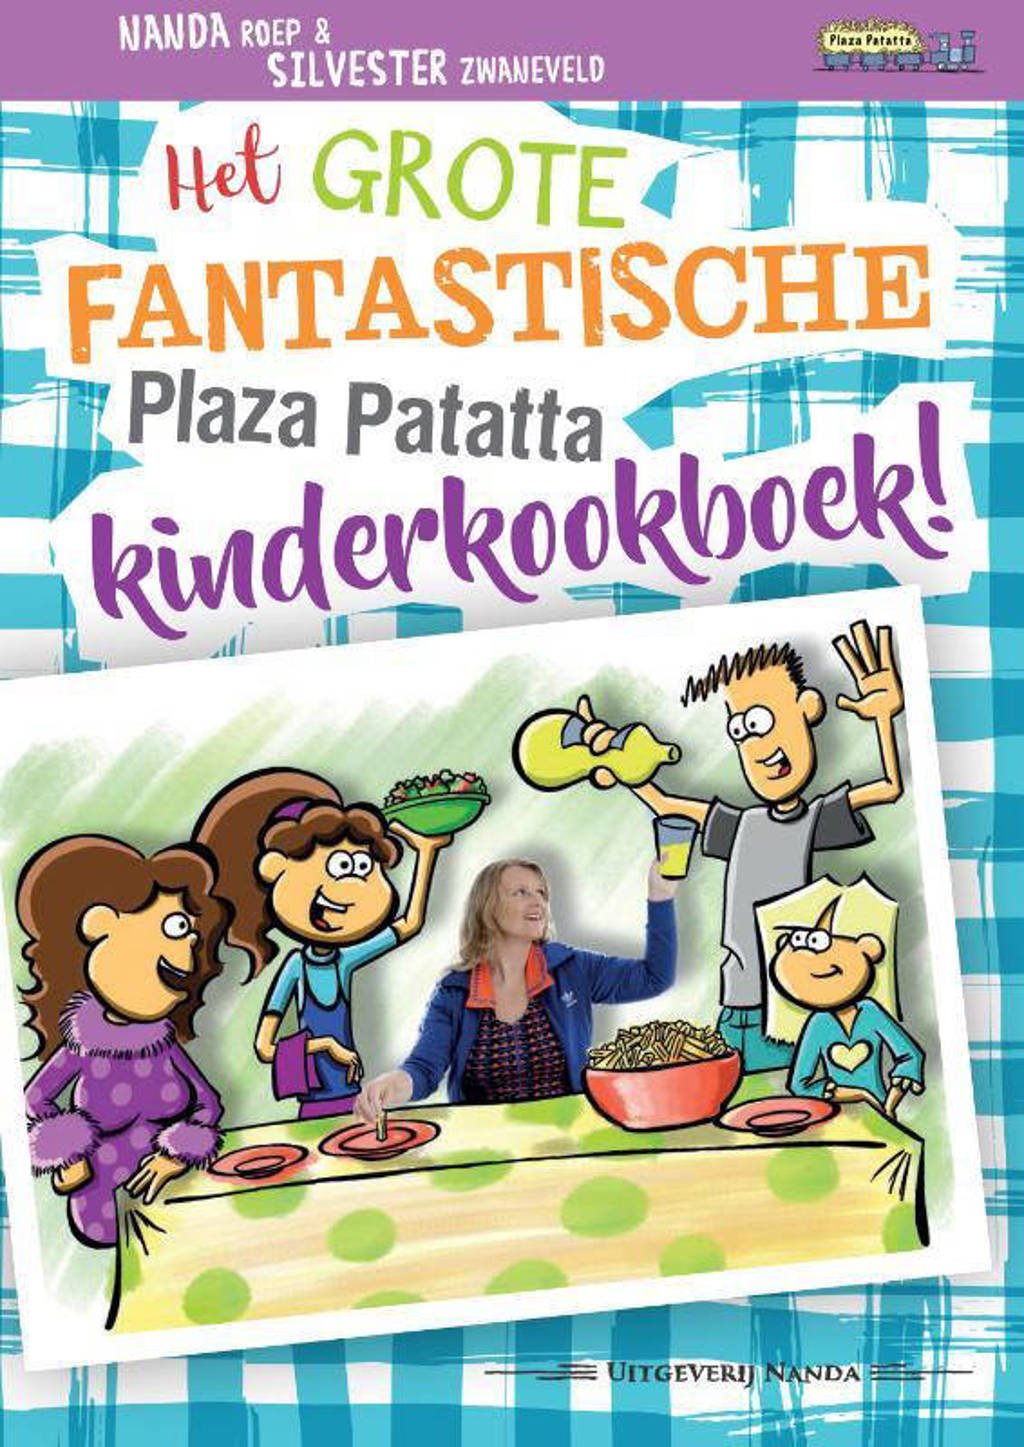 Plaza Patatta: Het grote fantastische Plaza Patatta kinderkookboek! - Nanda Roep